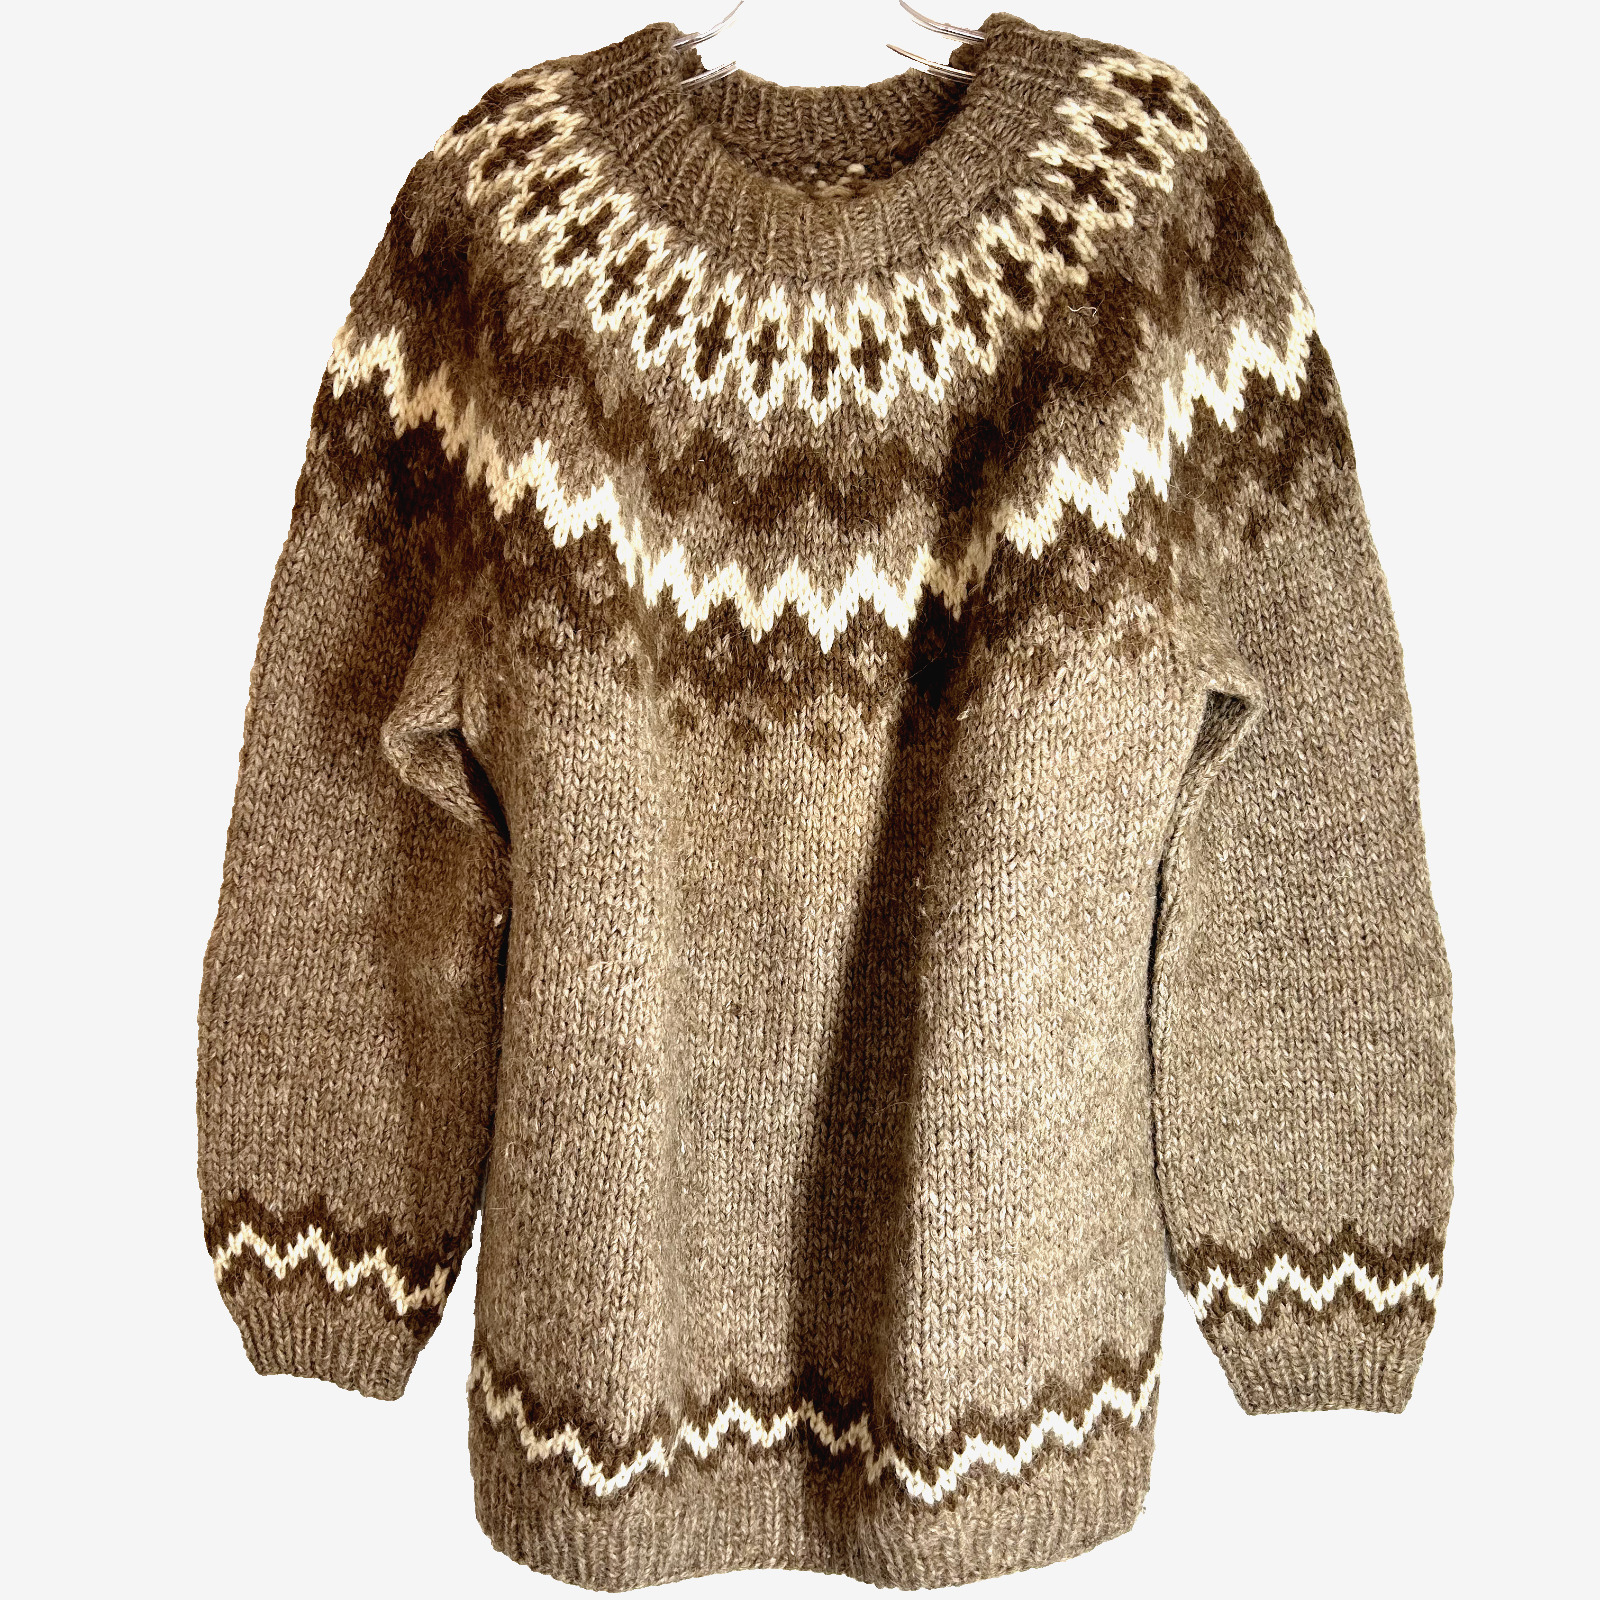 David Grains Iceland Sweater lopi Large 100%pure virgin wool fair isle MEN WOMAN